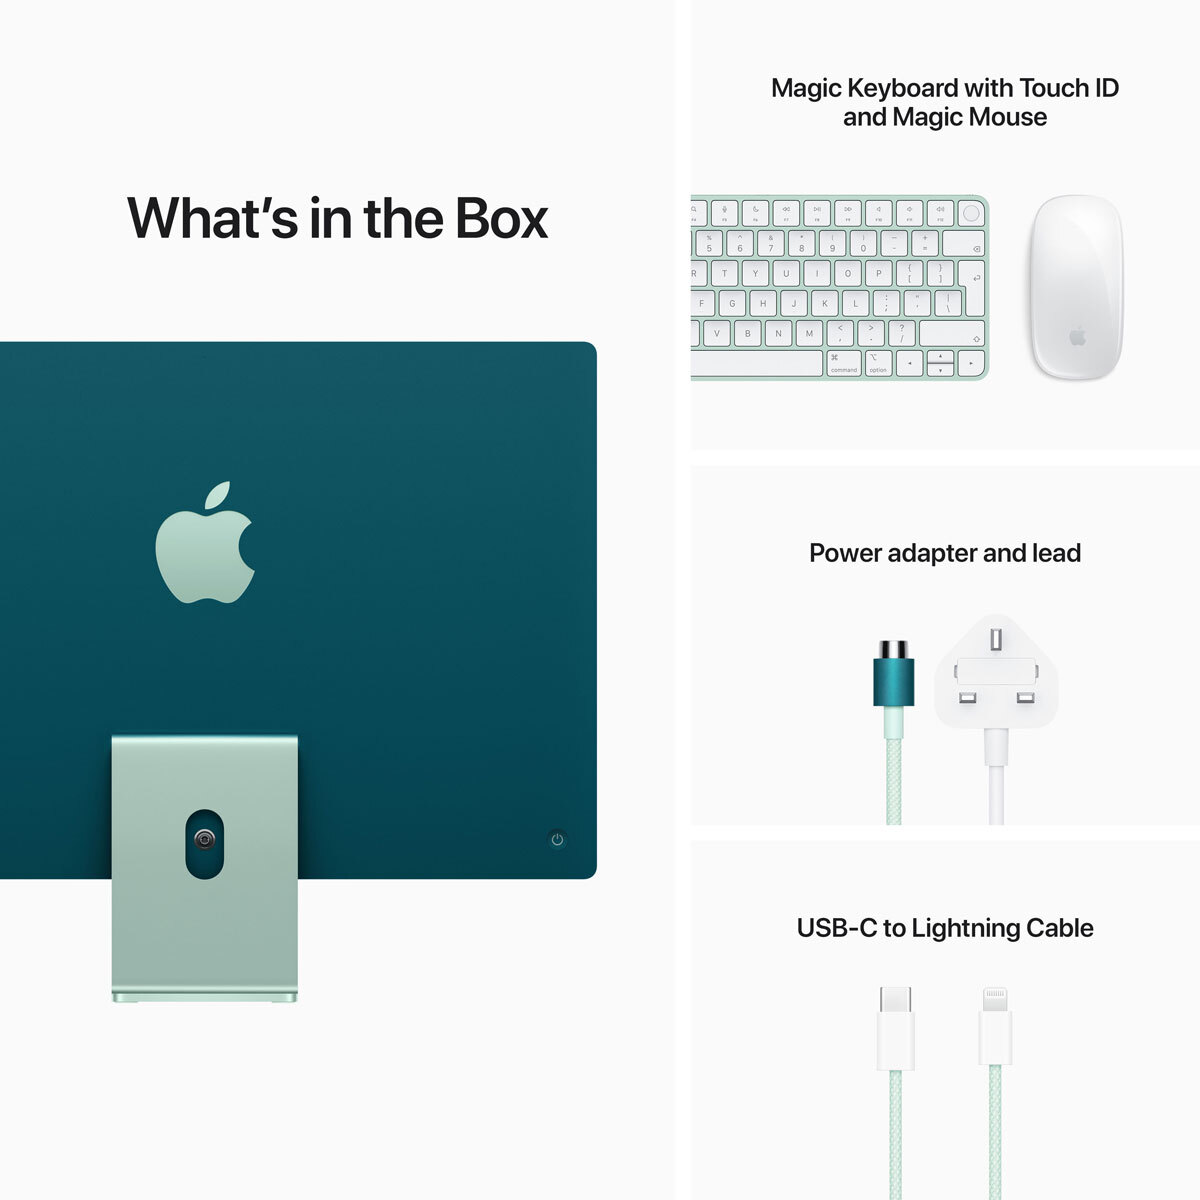 Buy Apple iMac 2021, M1, 8GB RAM, 512GB SSD, 24 Inch in Green, MGPJ3B/A at costco.co.uk